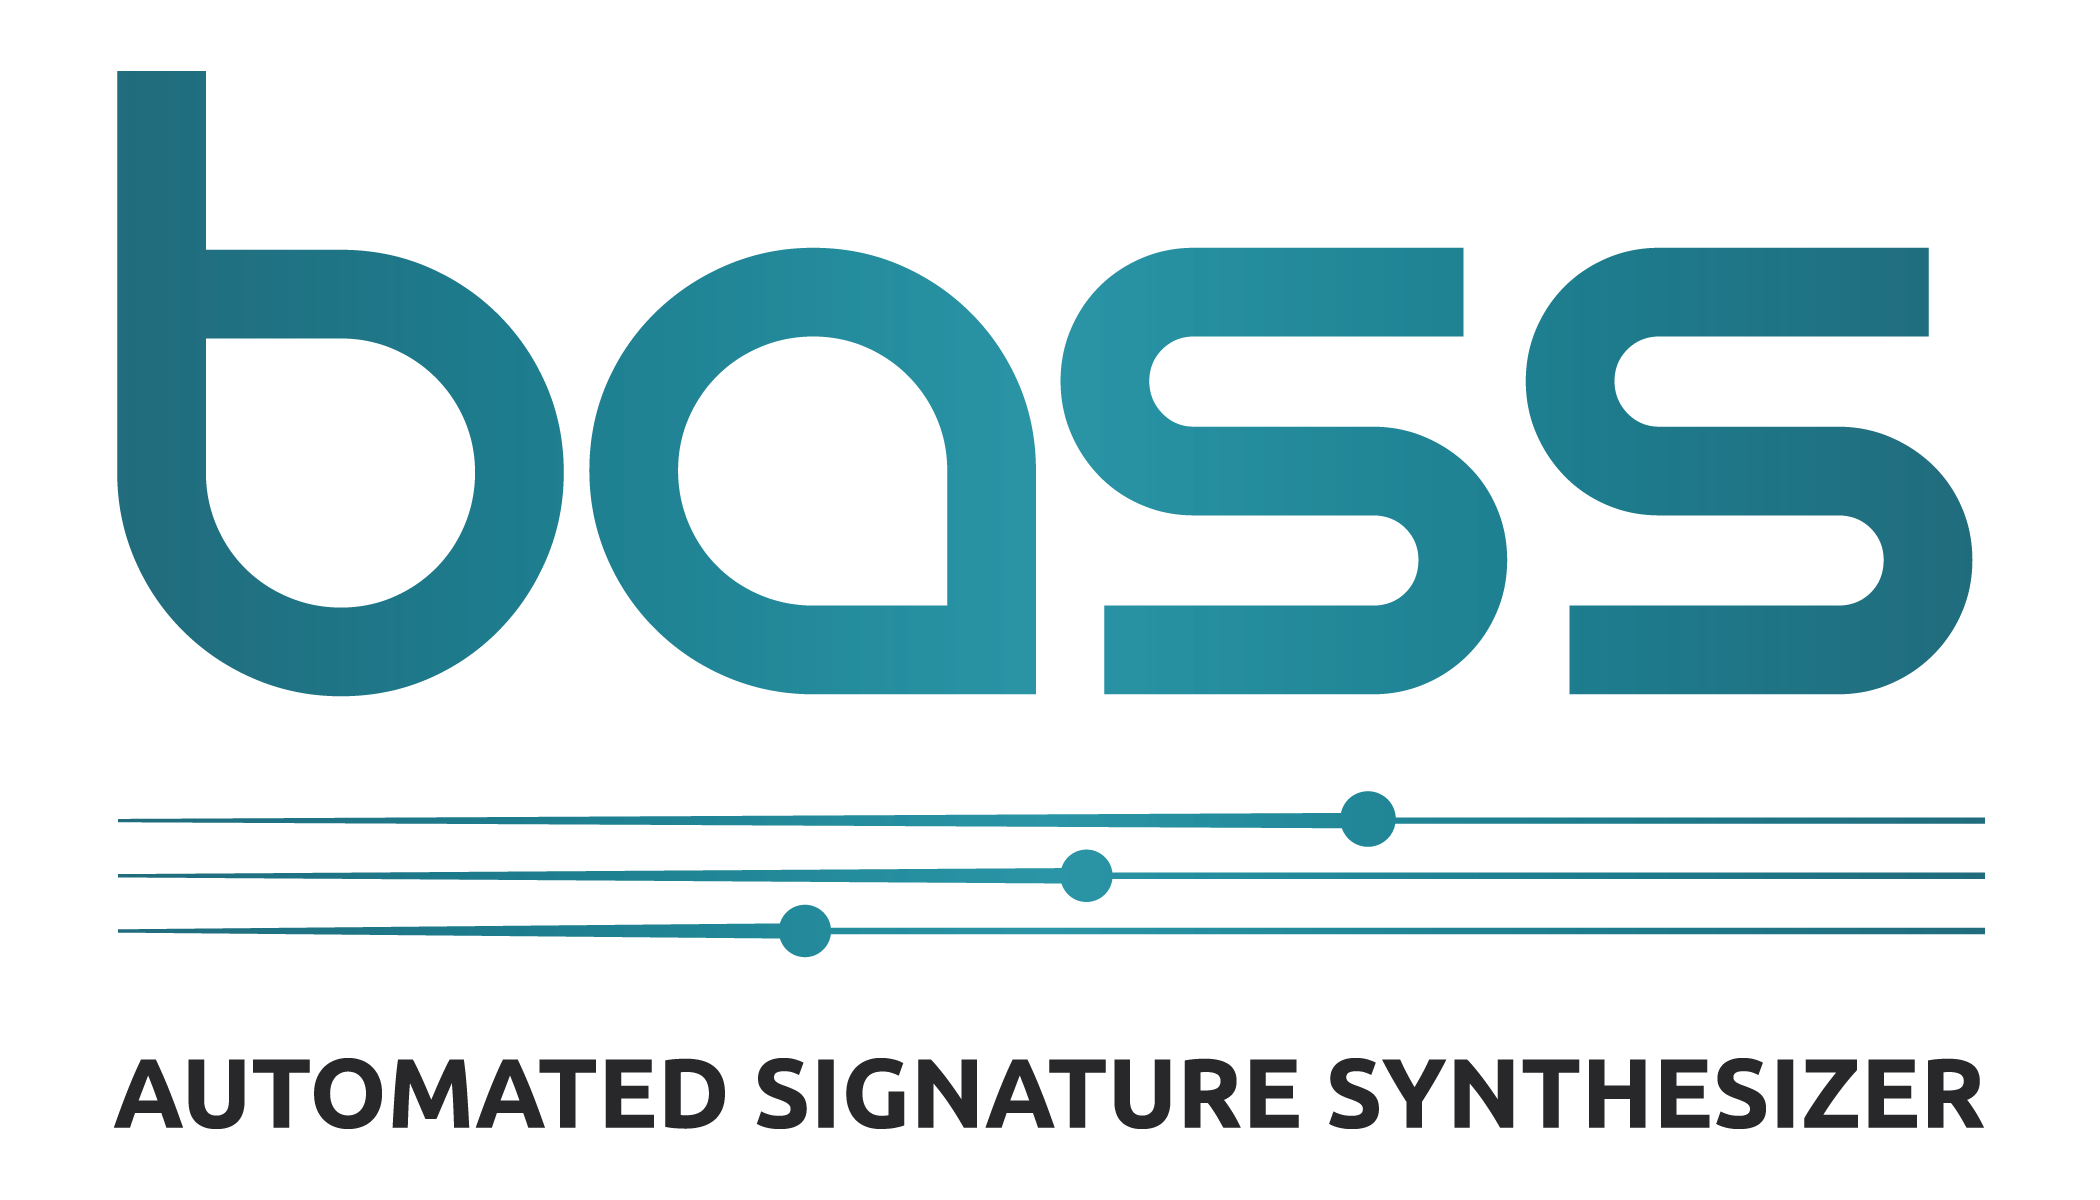 BASS logo